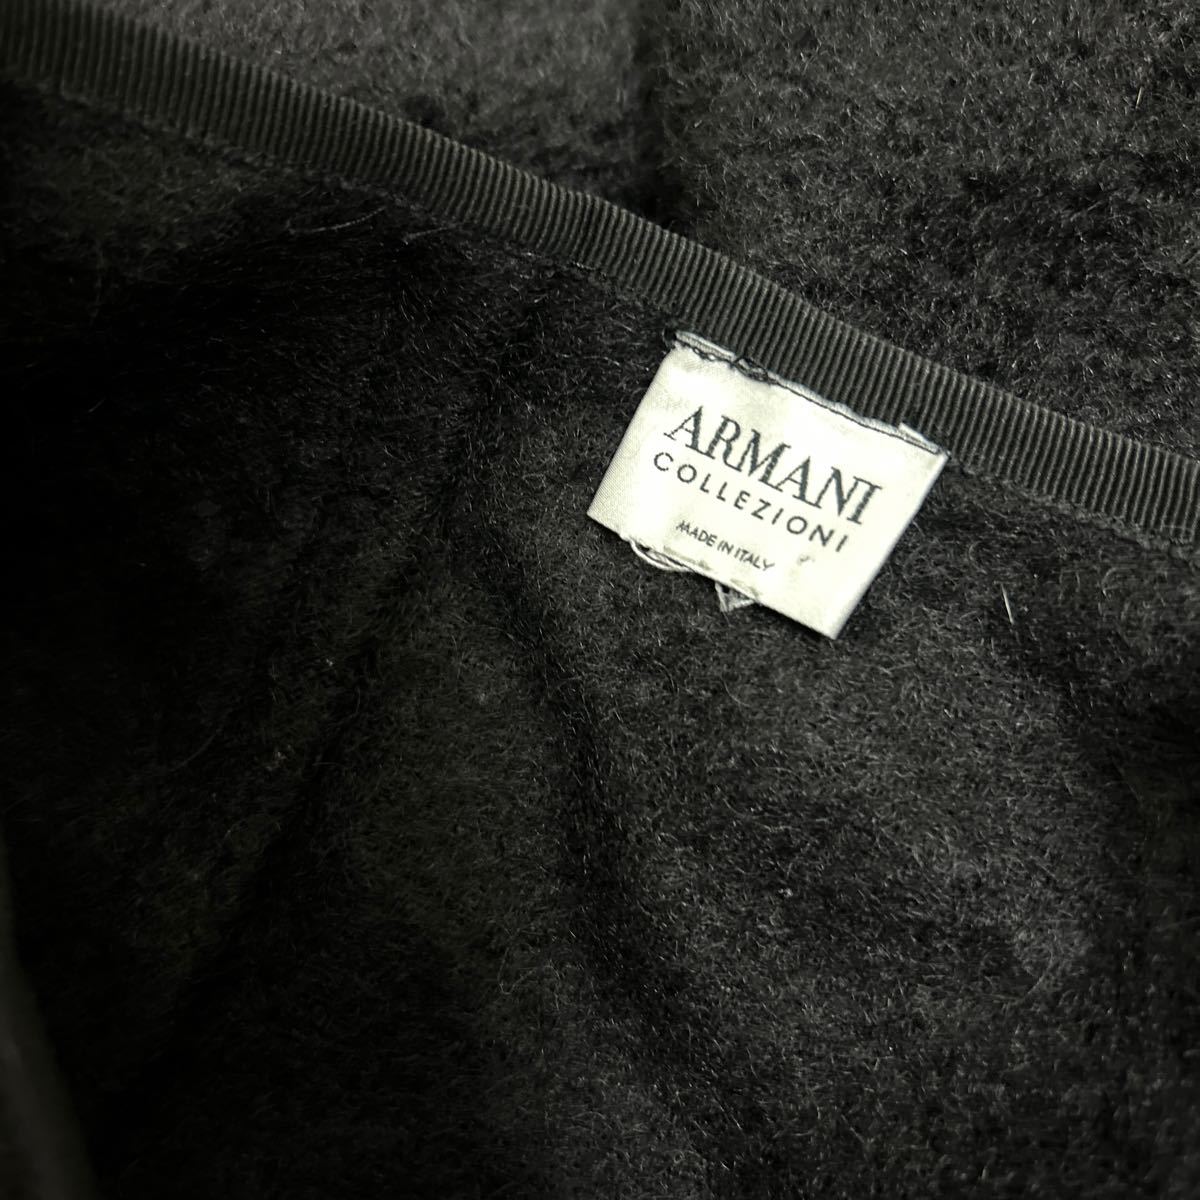 armani collezioni Armani Boyle do wool mo hair . miniskirt black 42 knees height skirt pleated skirt i1